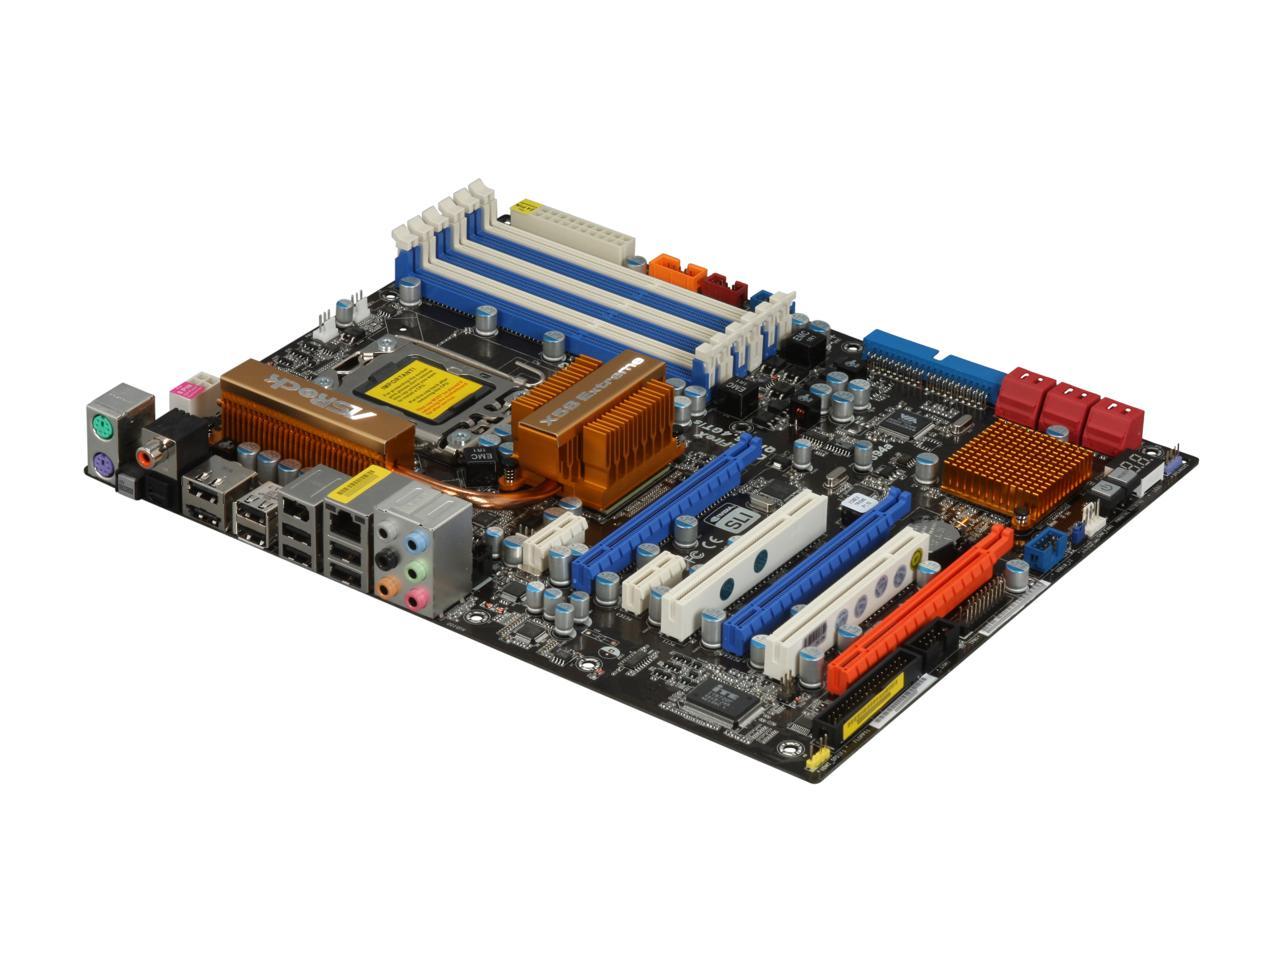 ASRock X58 Extreme LGA 1366 ATX Intel Motherboard - Newegg.com